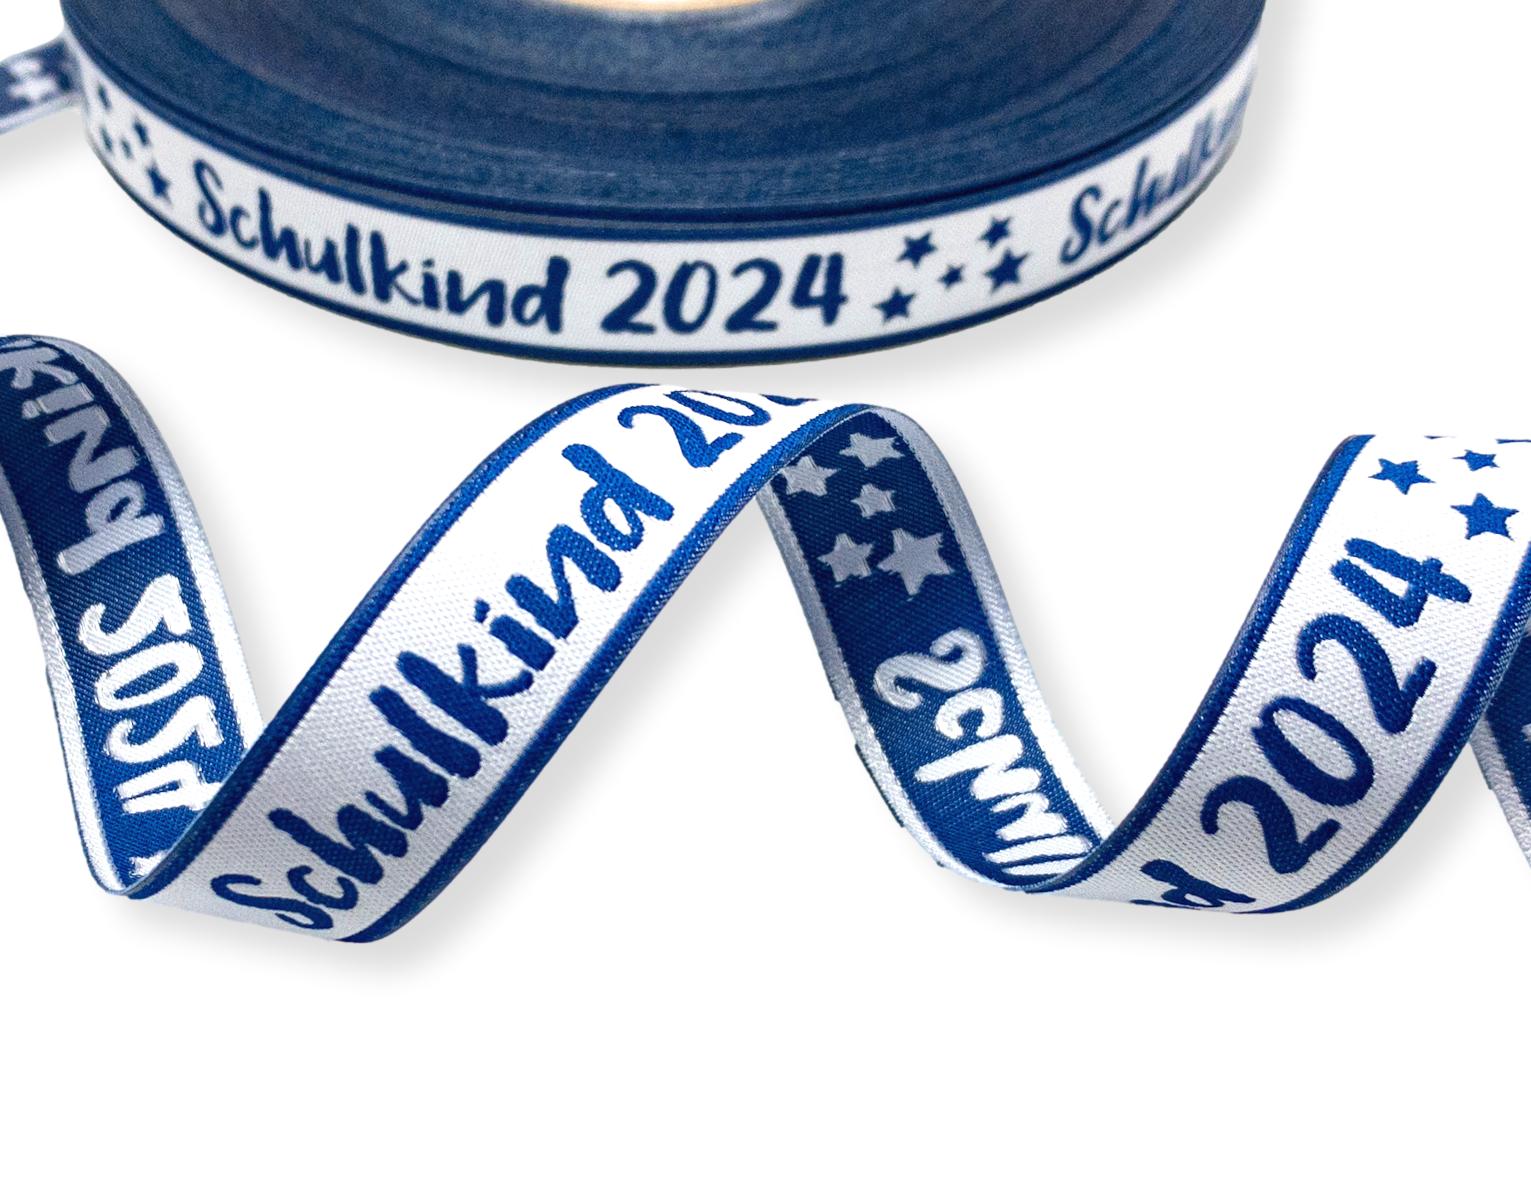 Webband Schulkind 2024 in blau 4